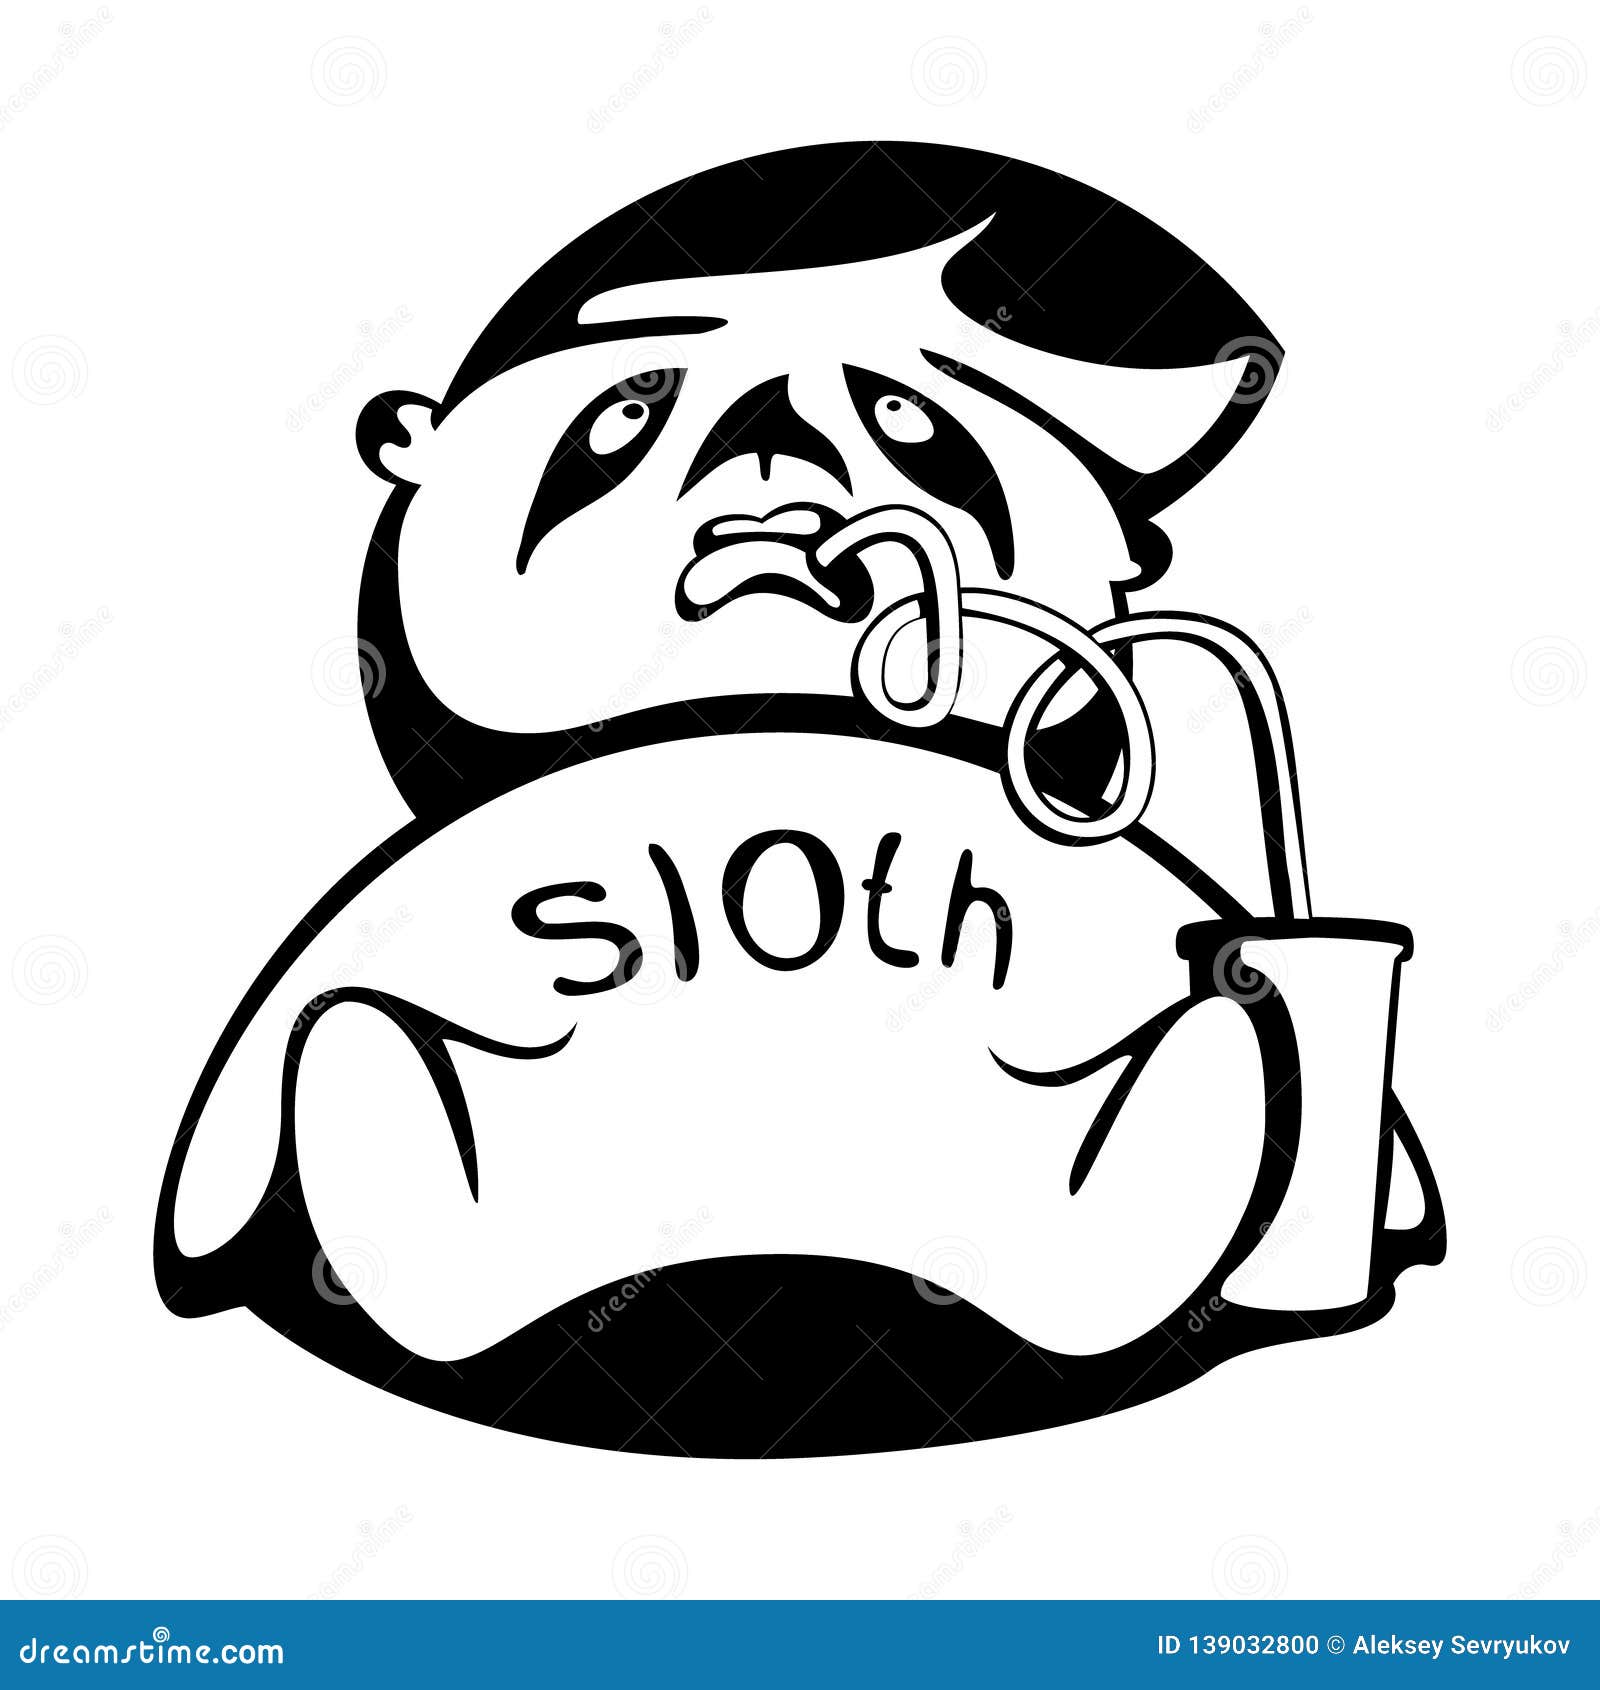 Lazy man. sloth stock vector. Illustration of vector - 139032800